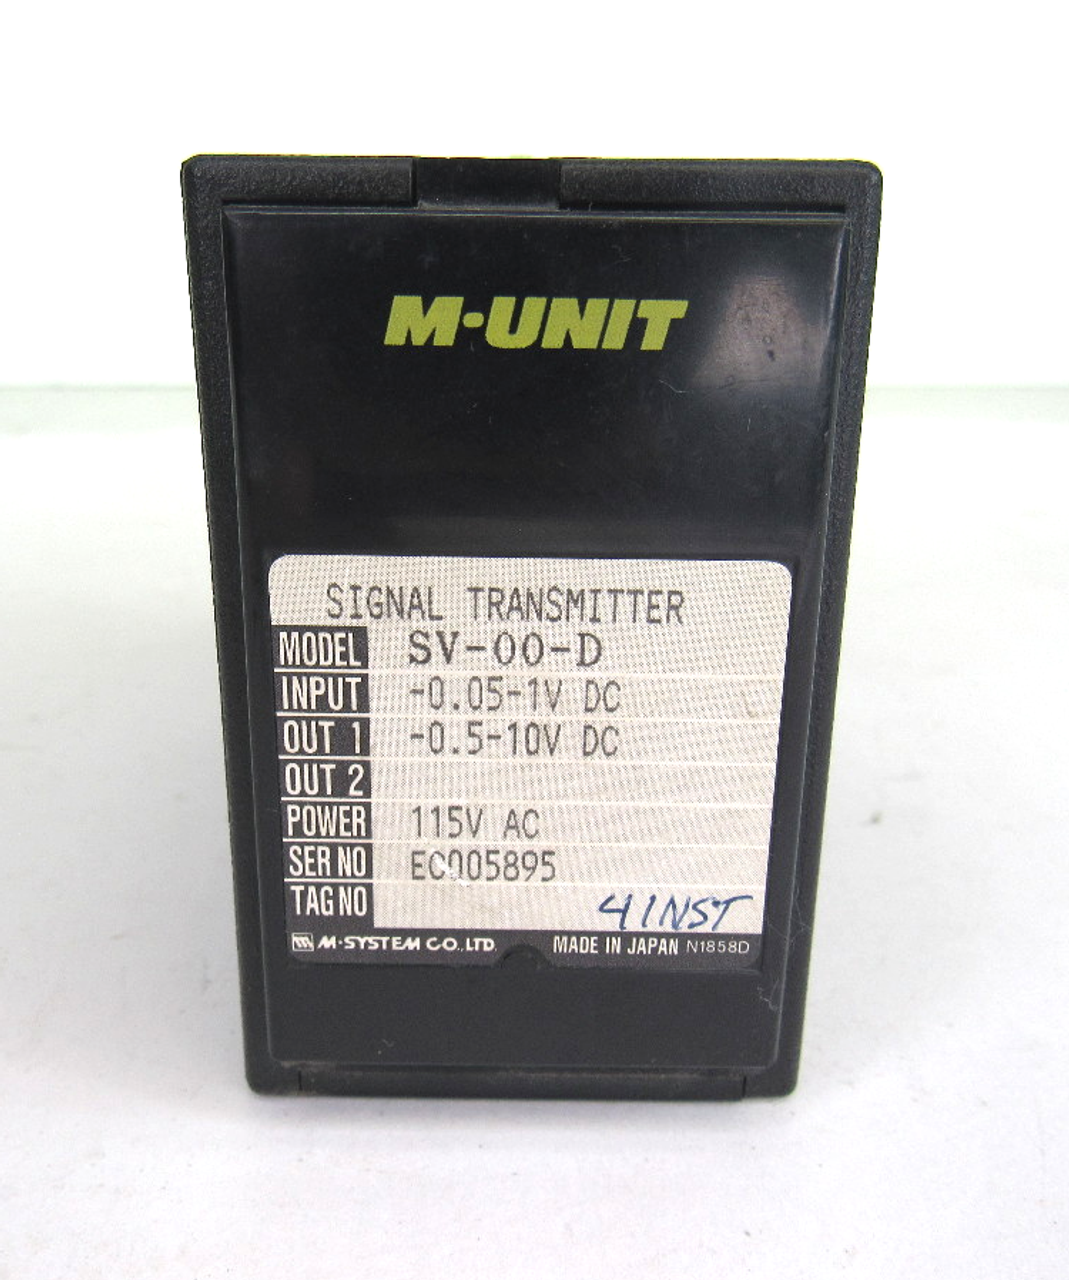 M-Unit SV-00-D Signal Transmitter